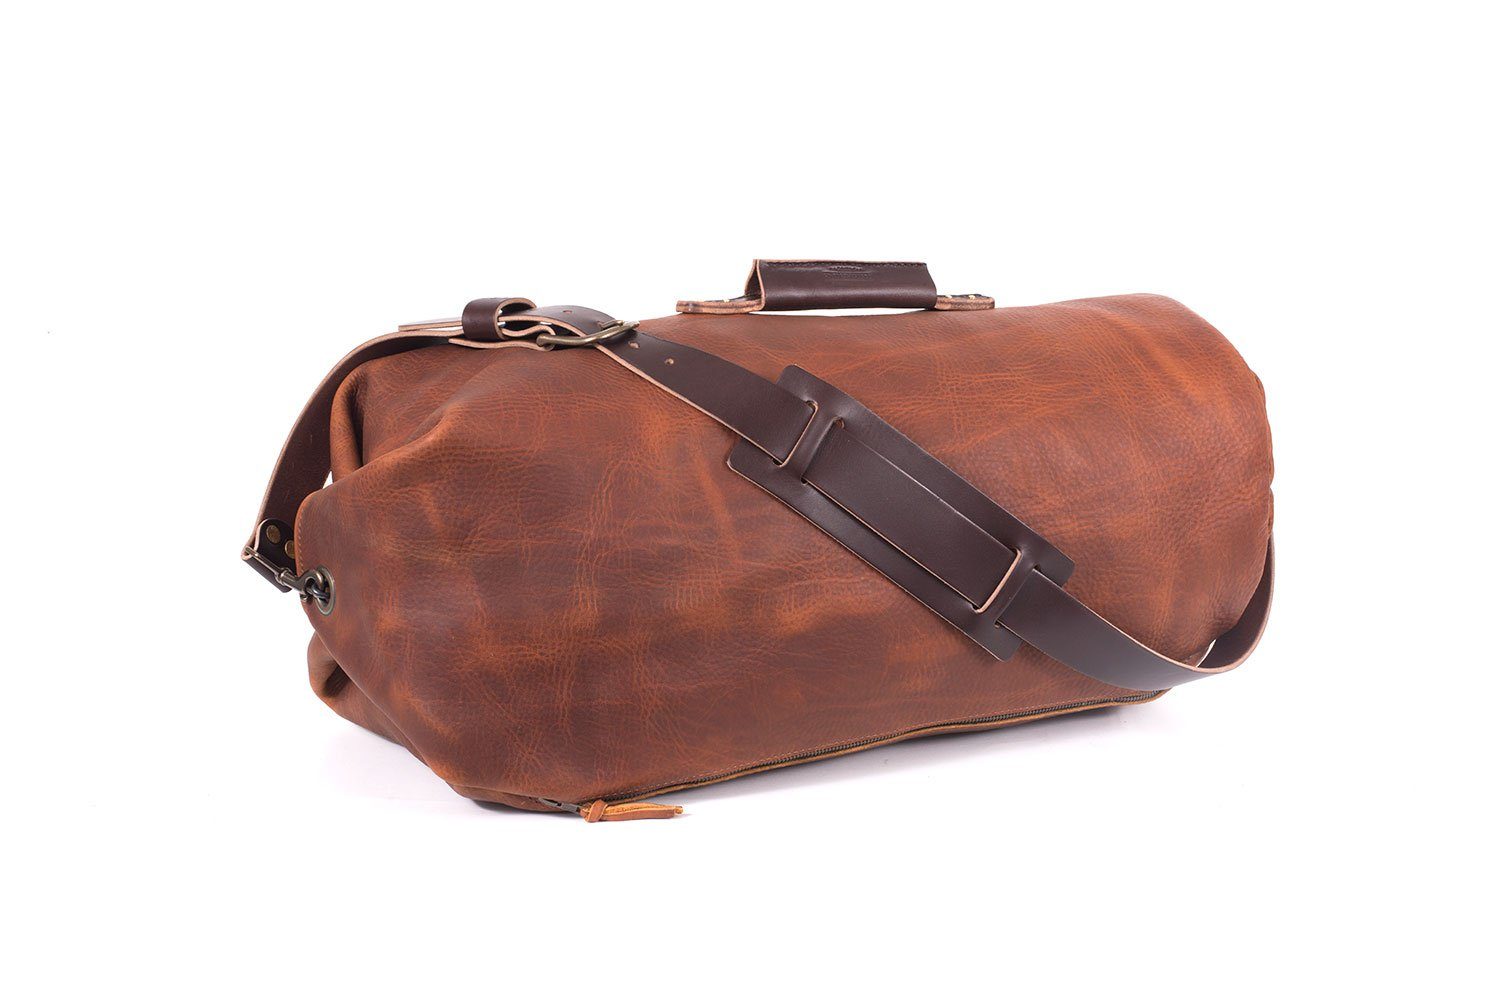 MO - Top Quality Bags LUV 102  Bags, Louis vuitton handbags